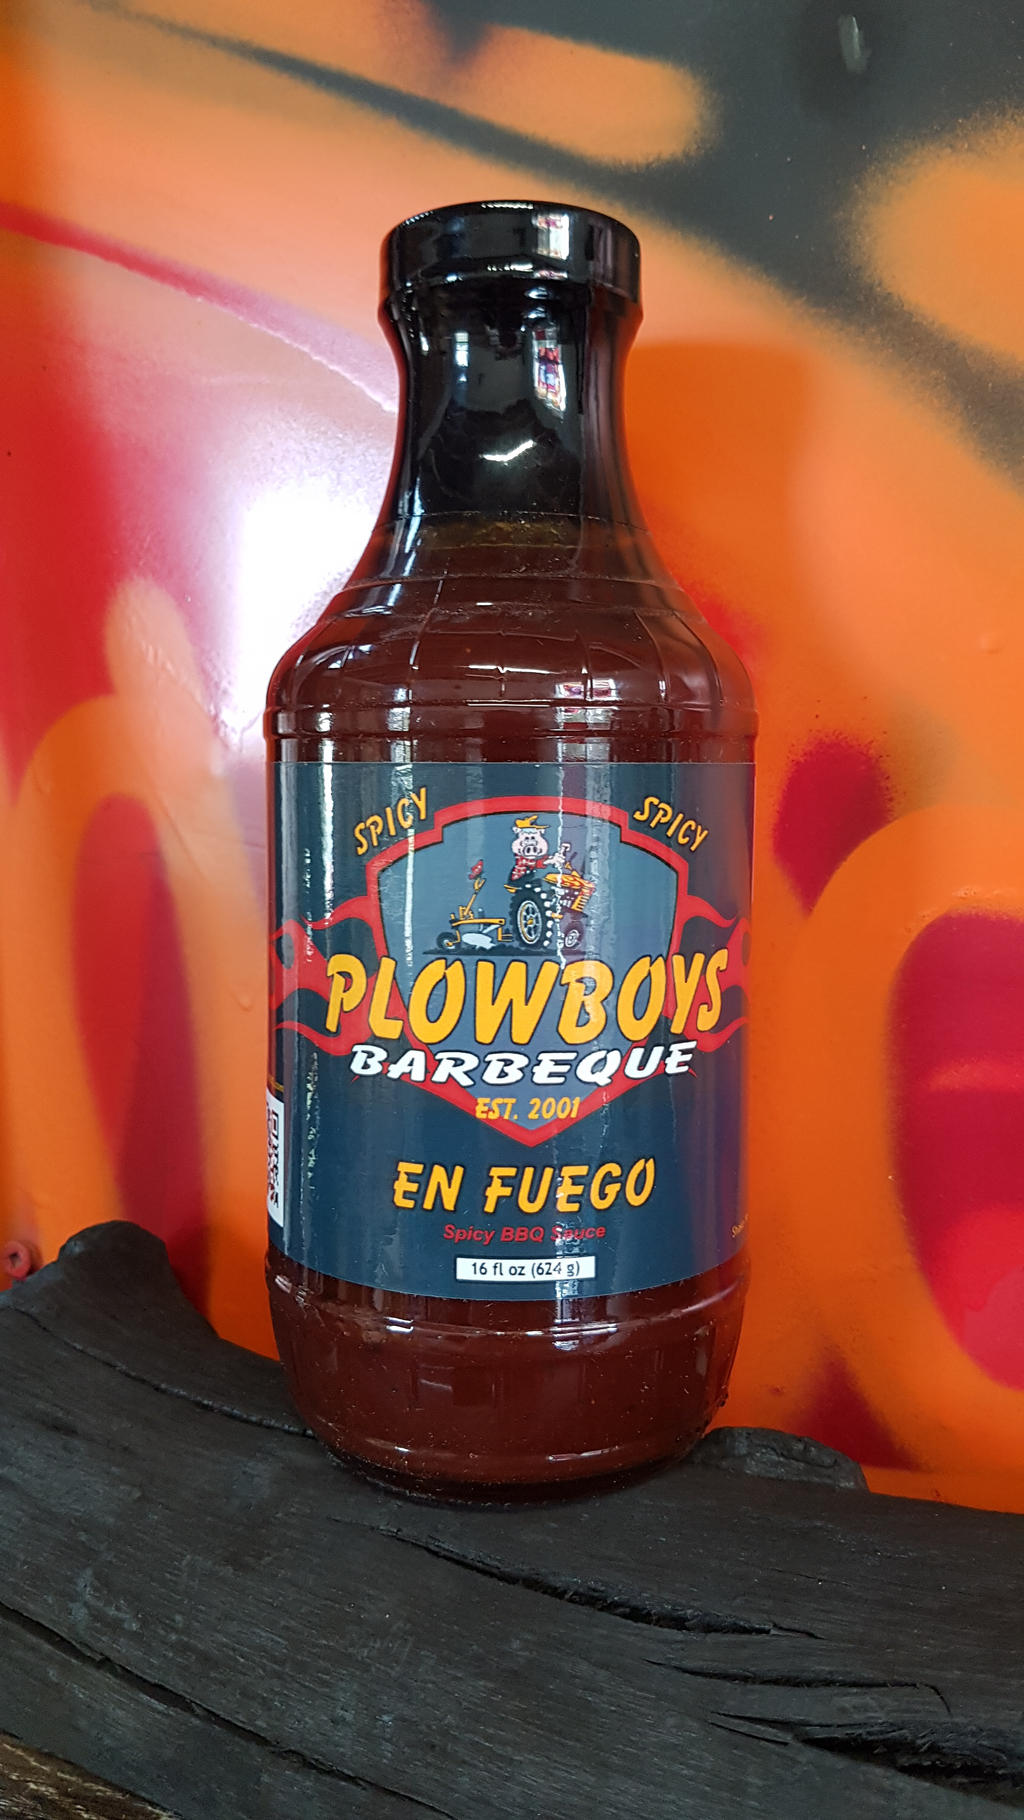 En Fuego Spicy BBQ Sauce by Plowboys BBQ